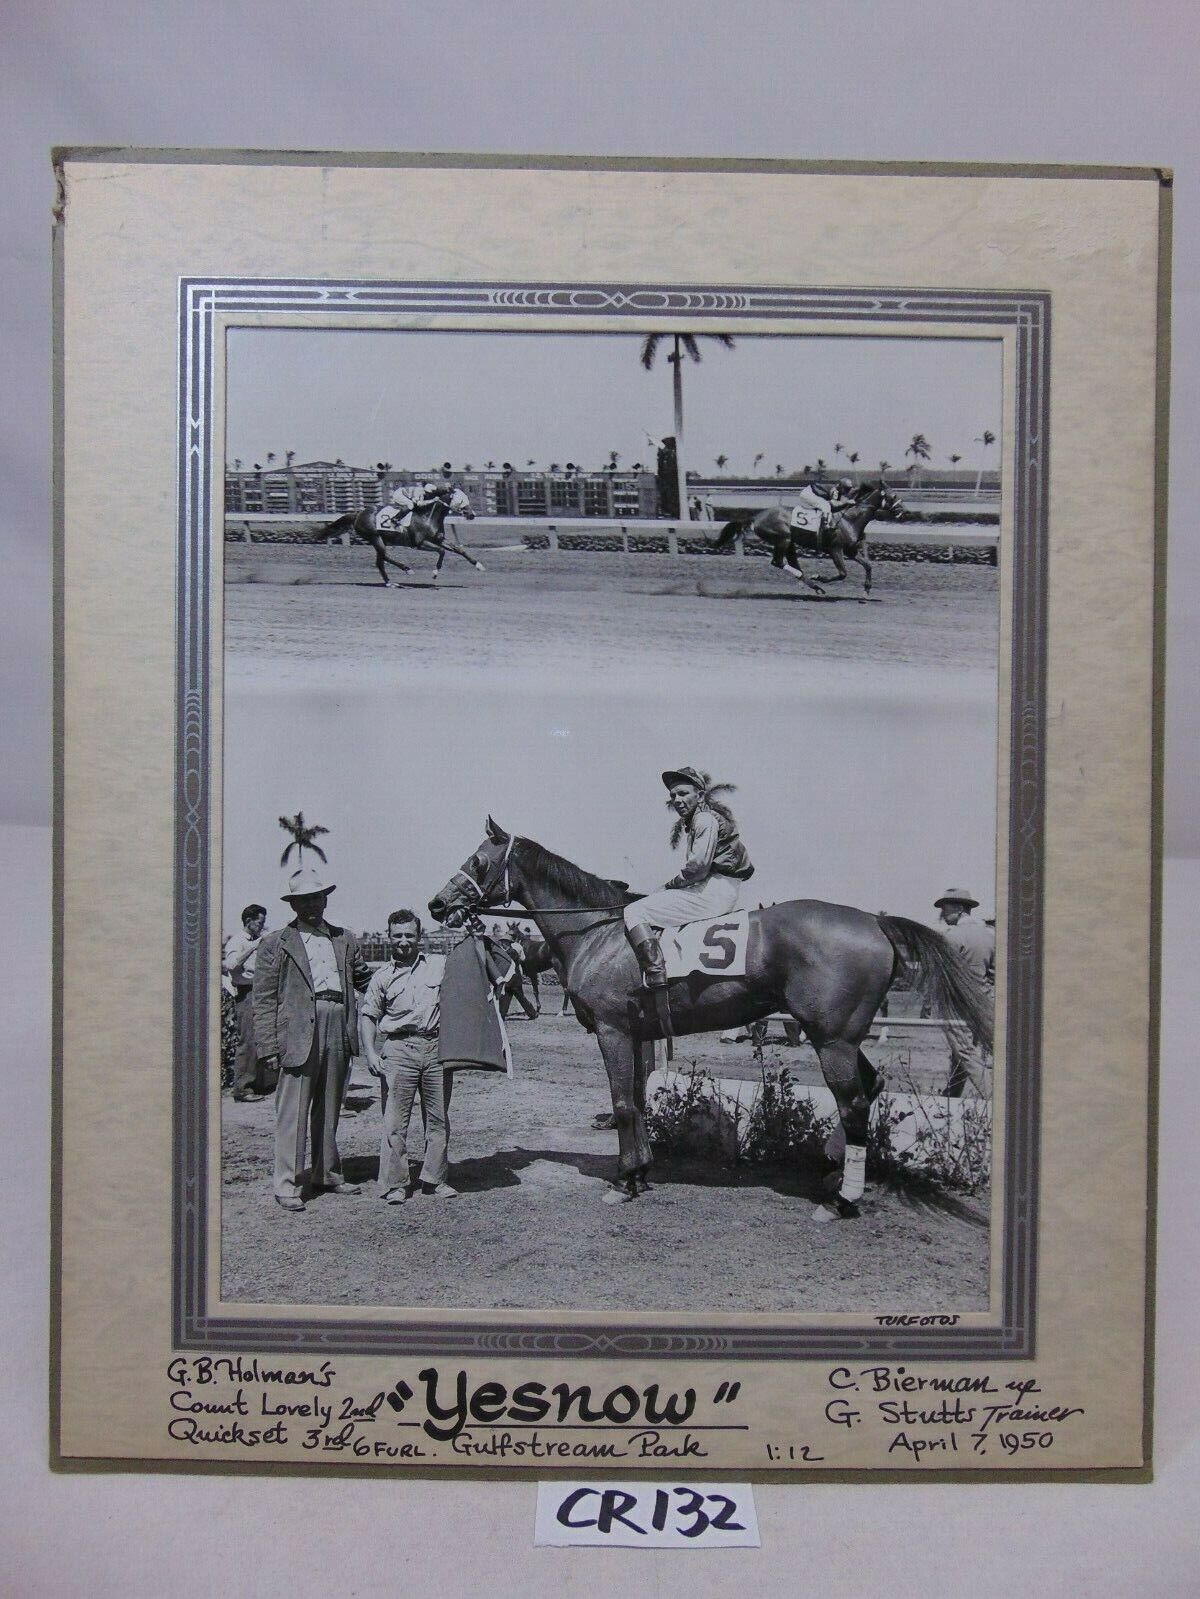 4-7-1950 PRESS PHOTO JOCKEYS ON HORSES RACE AT GULFSTREAM PARK-YESNOW-C BIERMAN 